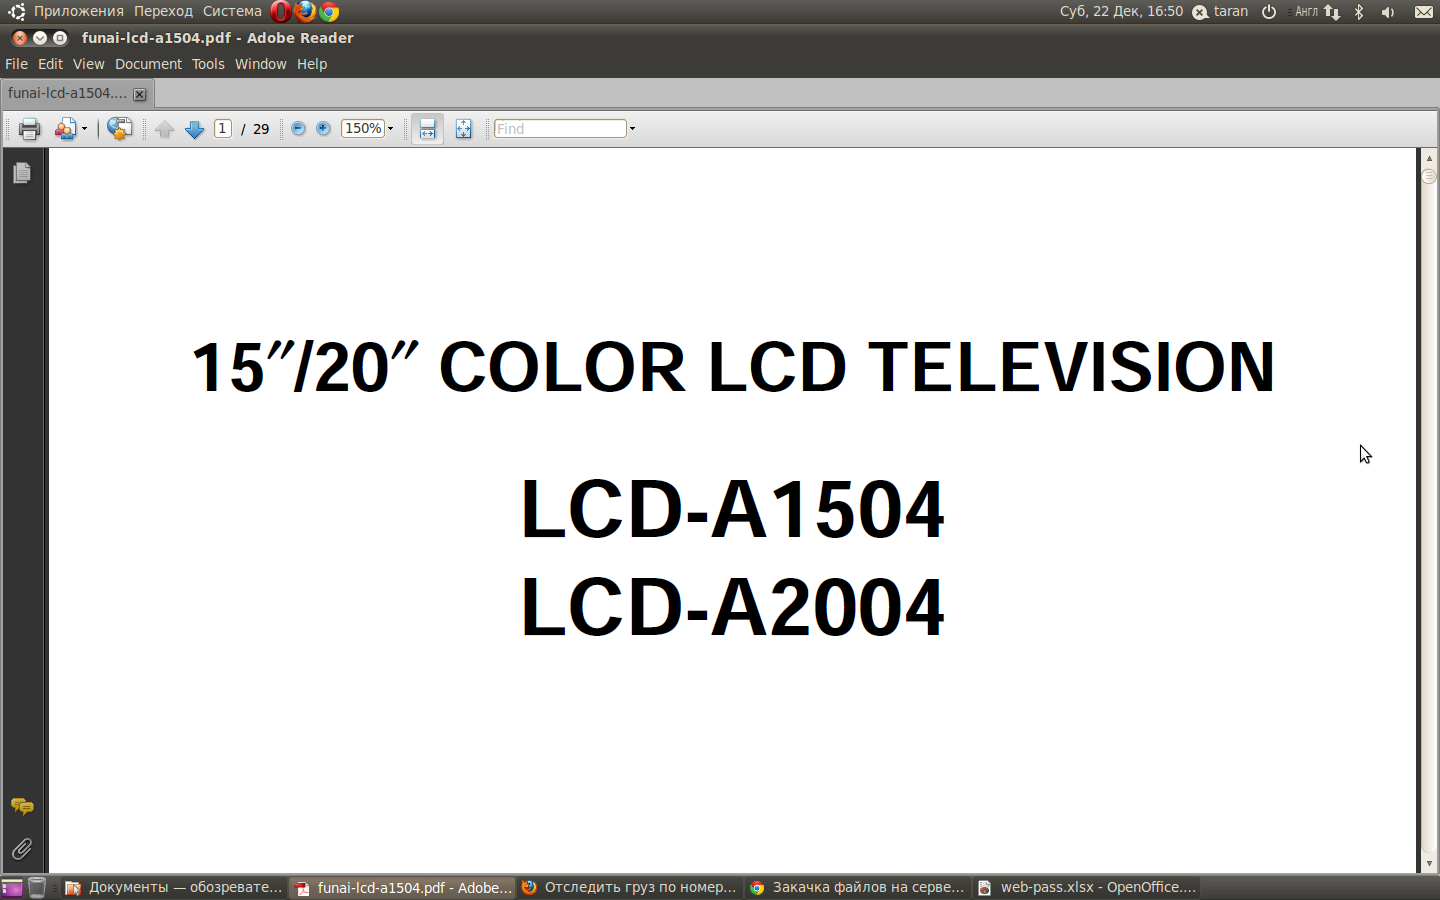  Funai LCD-A1504, LCD-A2004